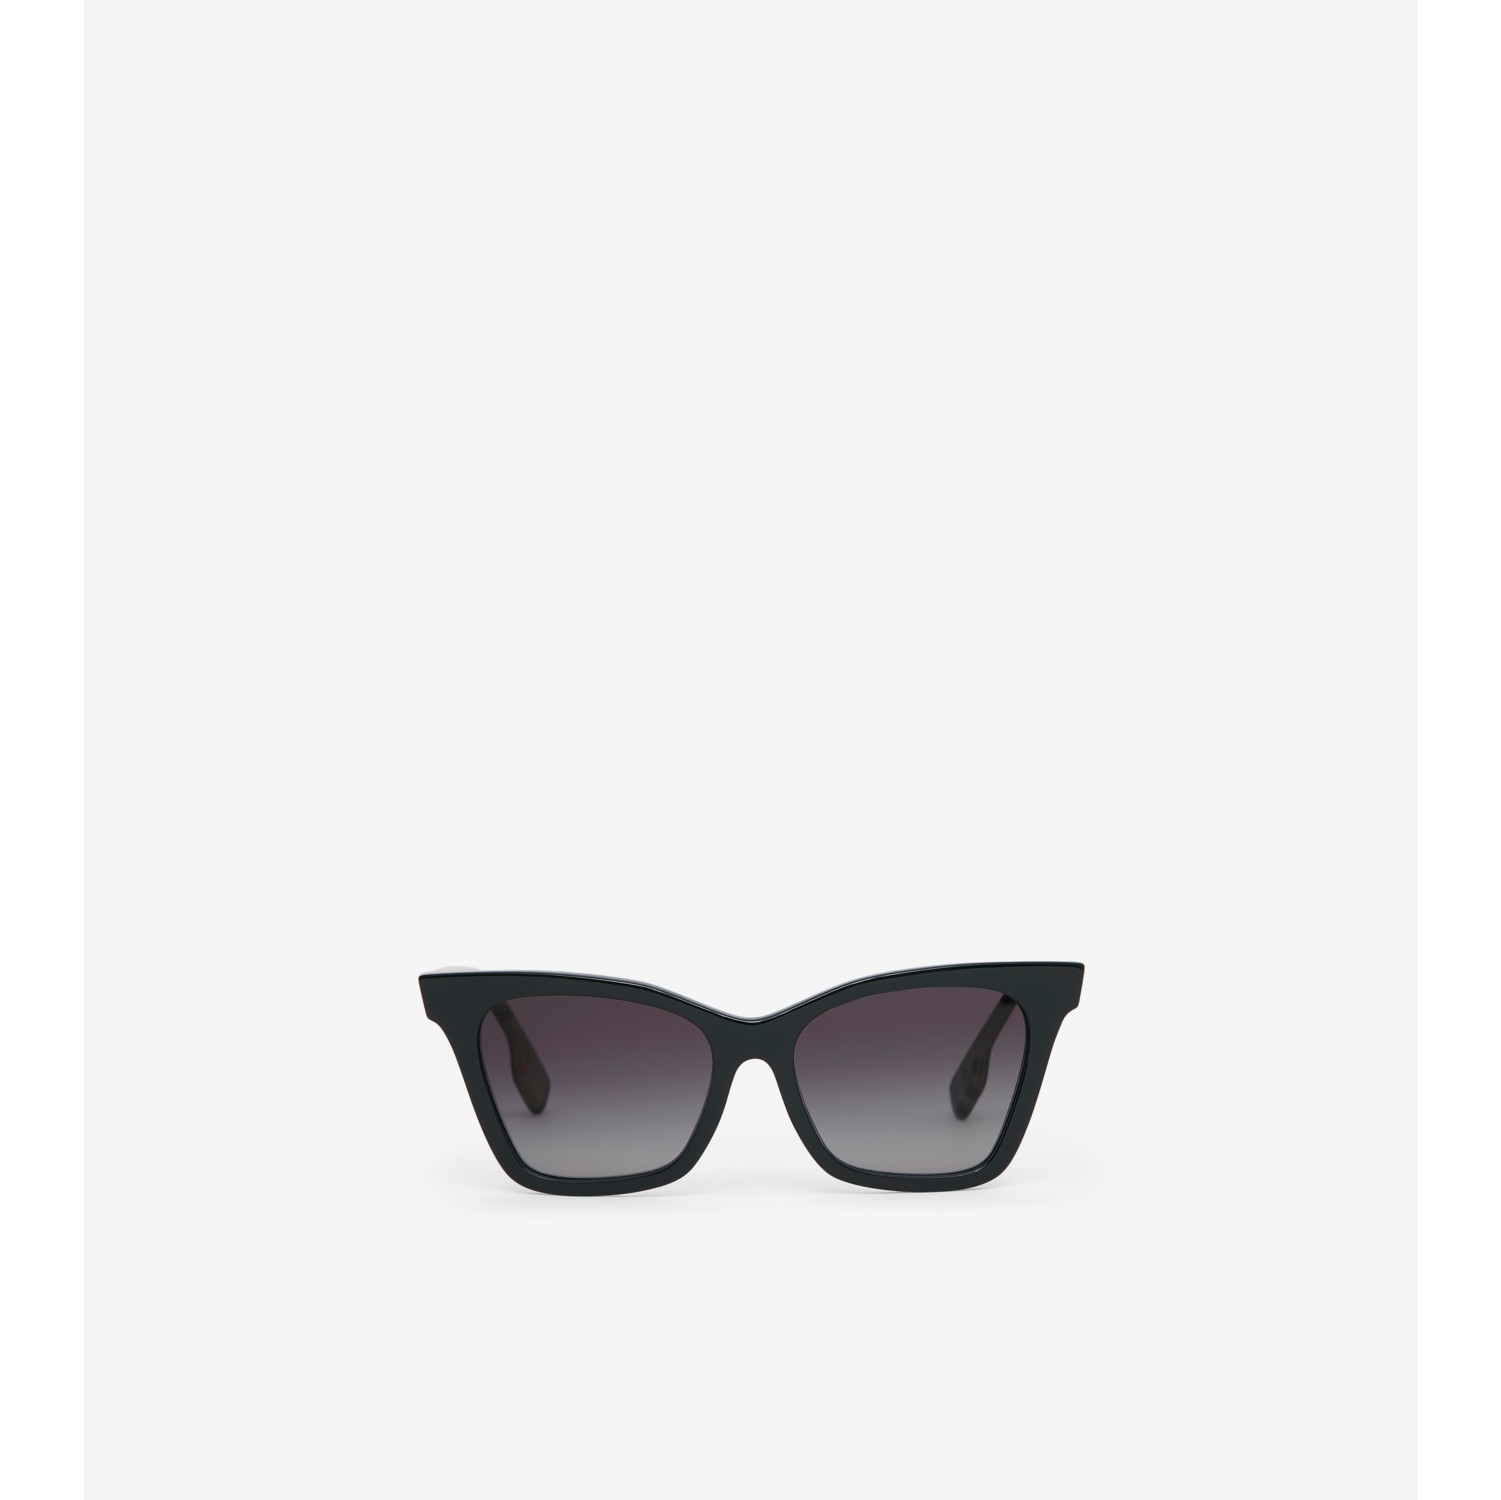 Square frame sunglasses in black acetate